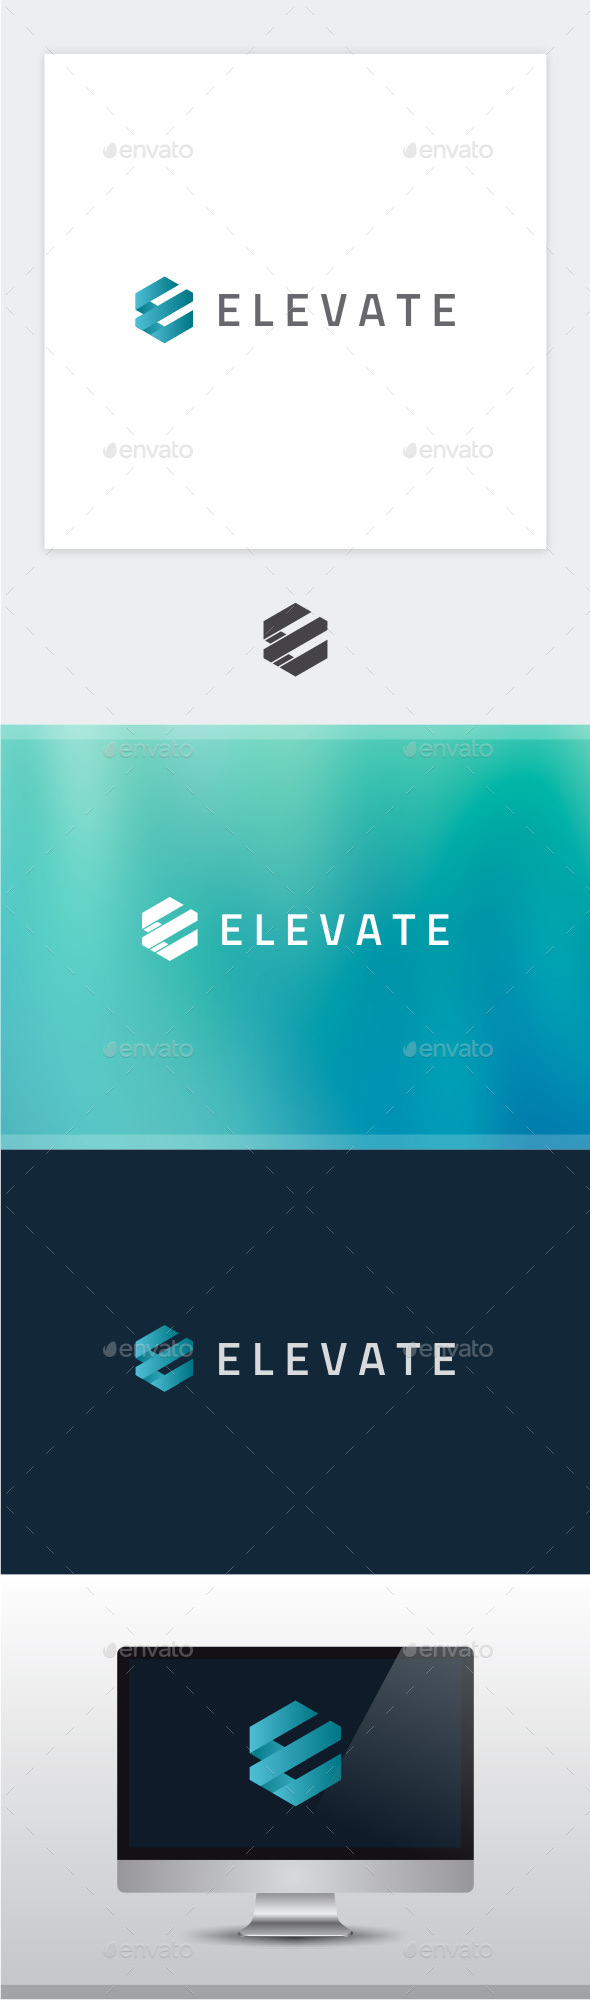 Elevate - Letter E Logo